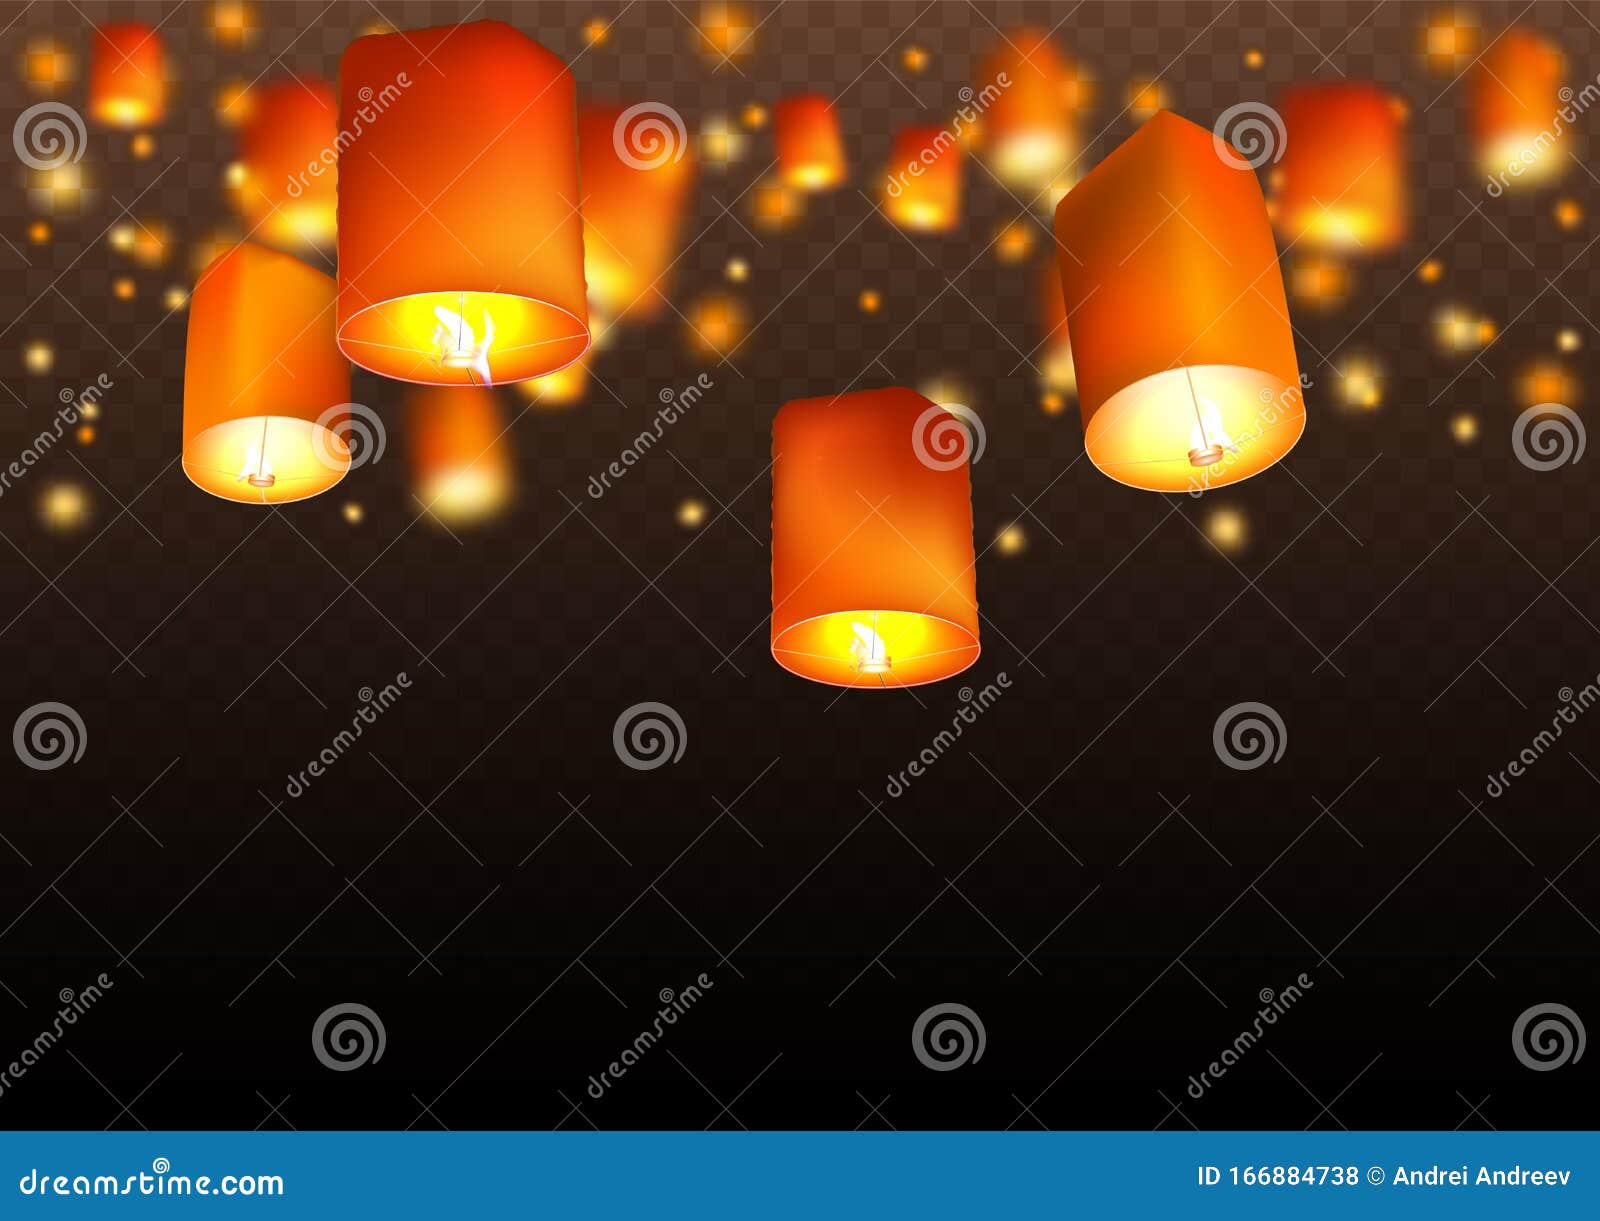 Lanterns Isolated on Transparent Background. Happy Diwali Festival  Decoration Elements Stock Vector - Illustration of china, bright: 166884738